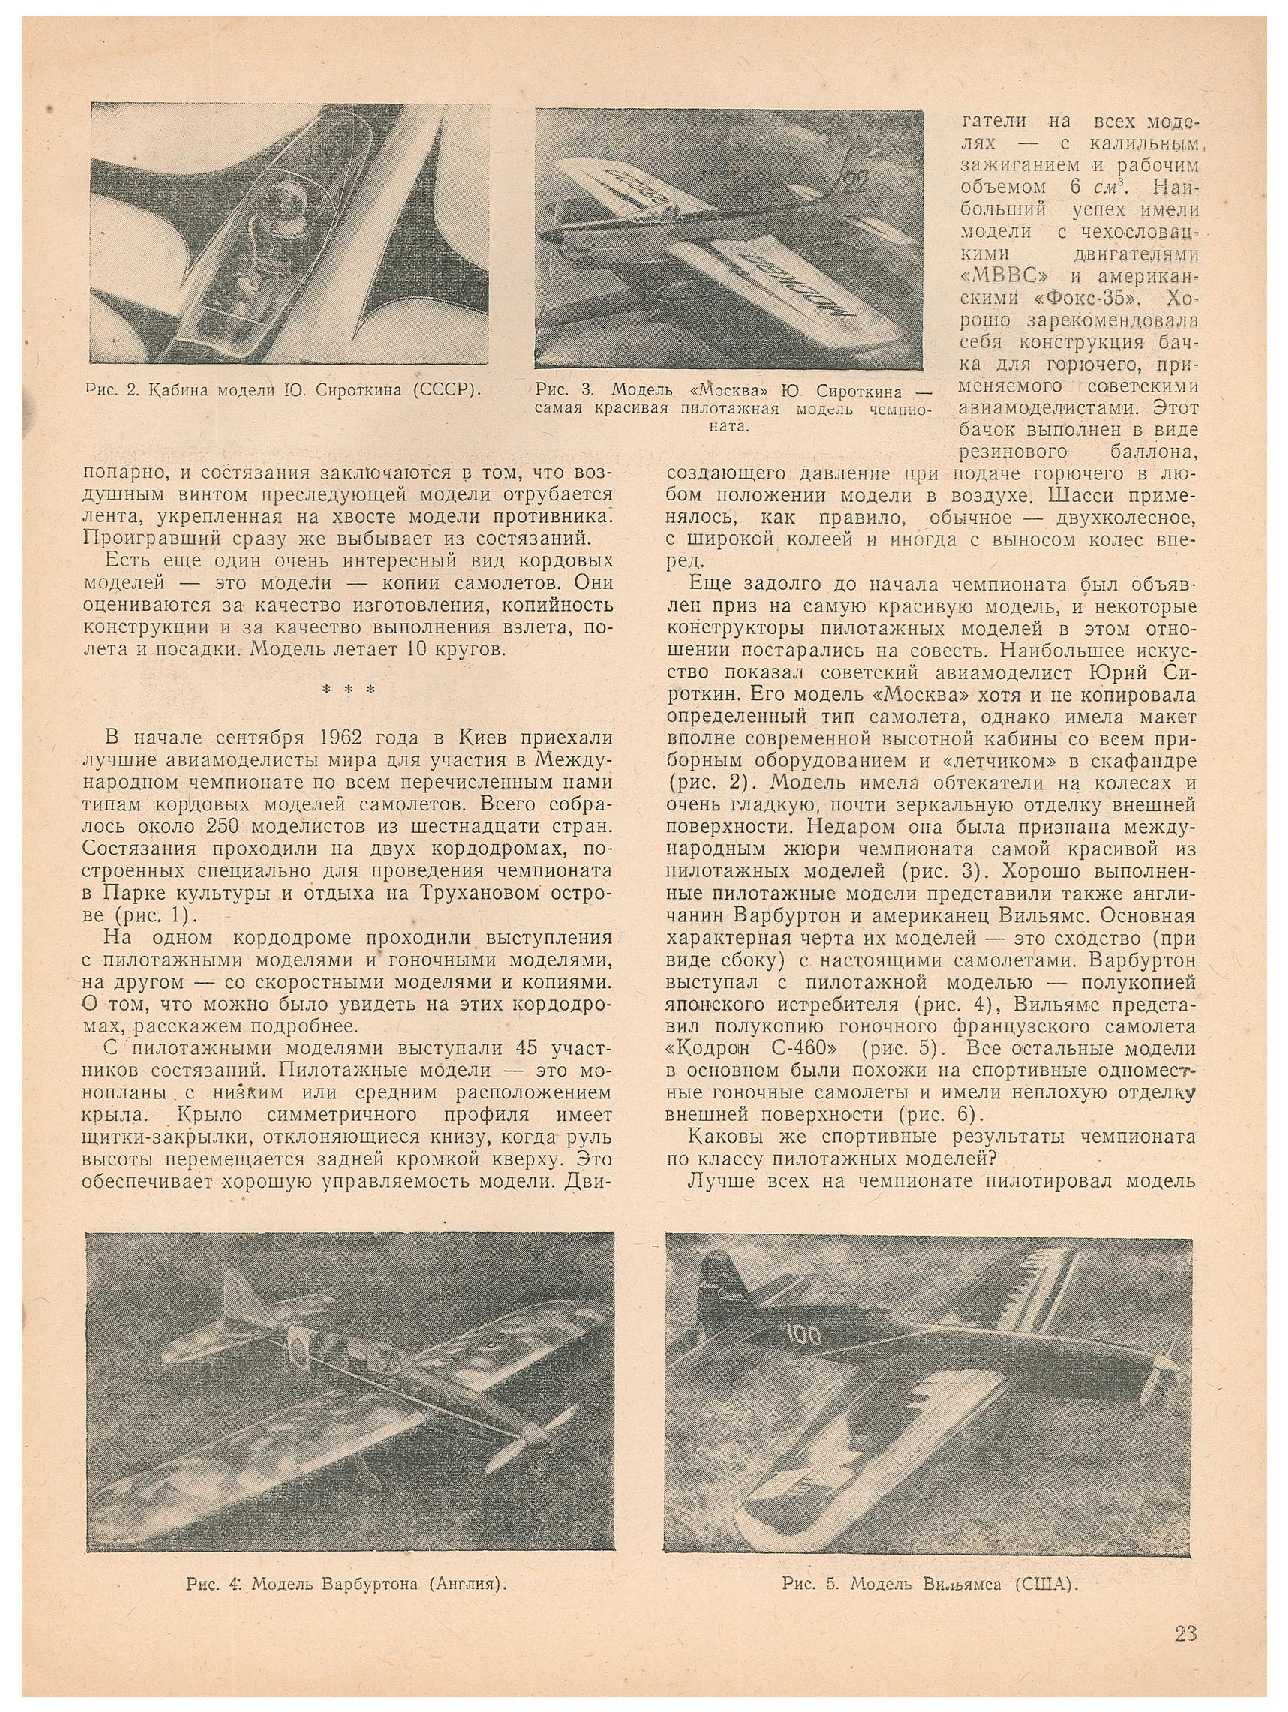 ЮМК 3, 1962, 23 c.